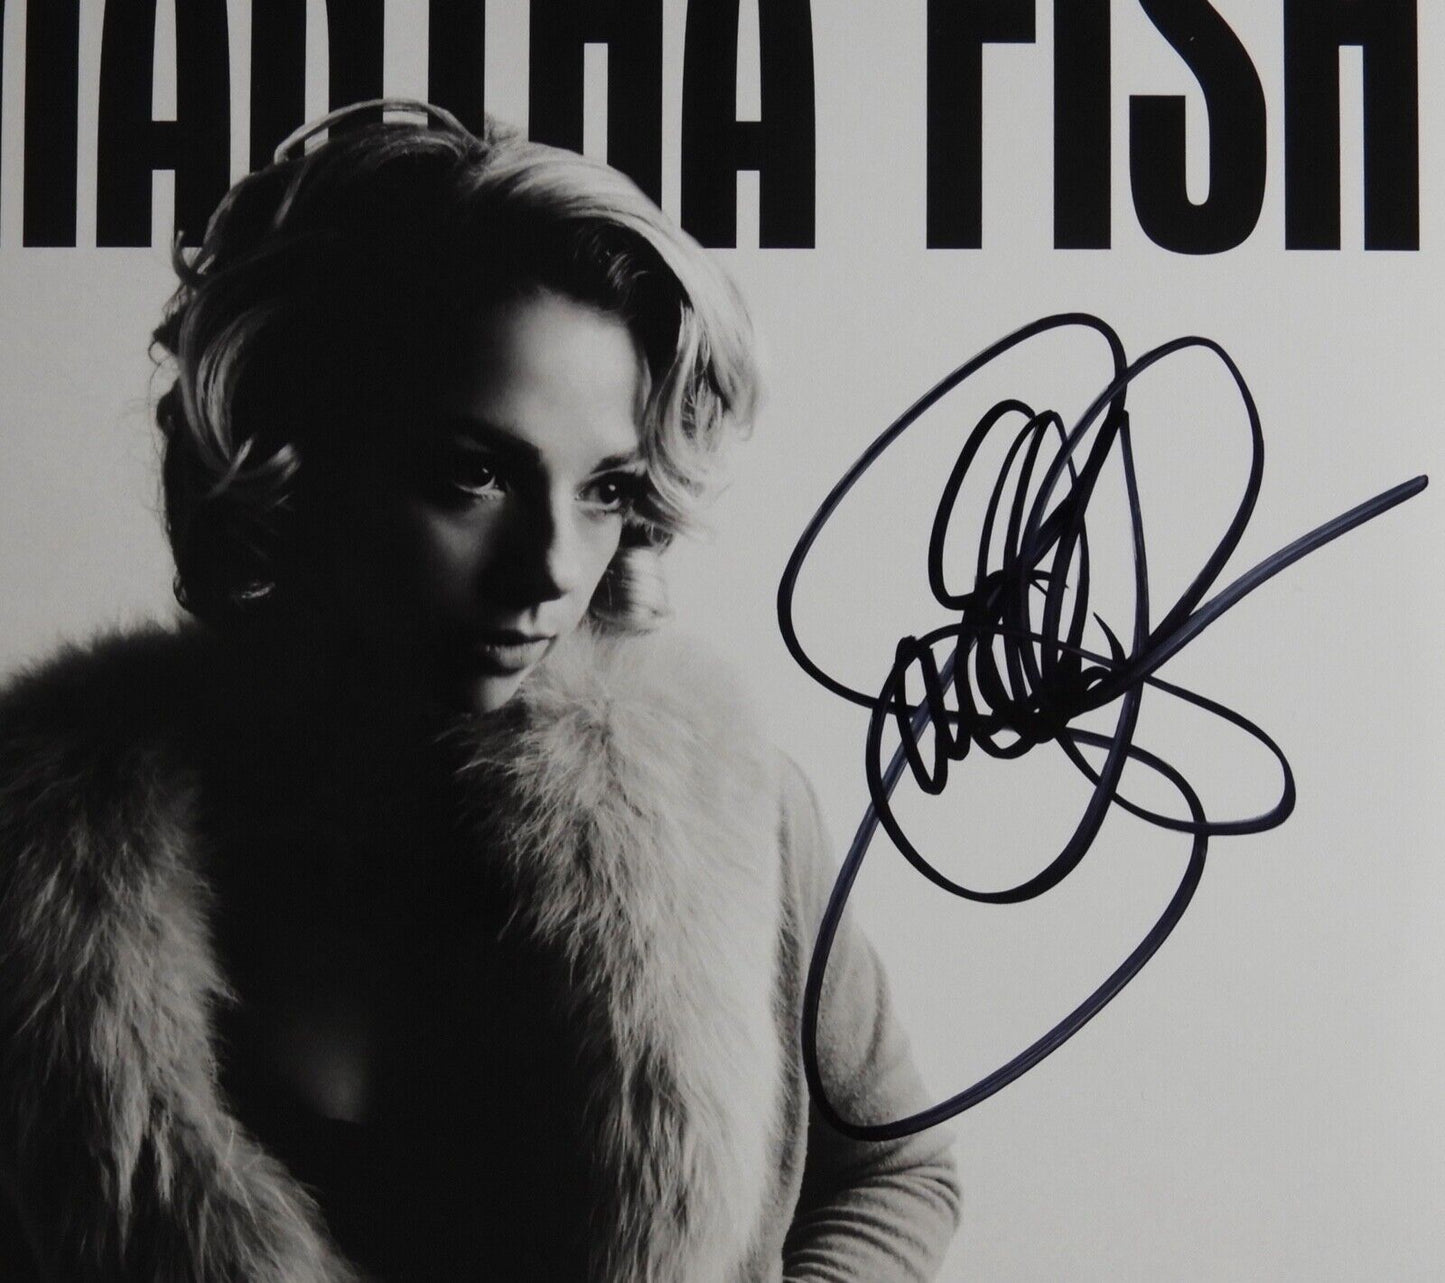 Samantha Fish JSA Autograph Signed Album Record Vinyl Belle Of The West